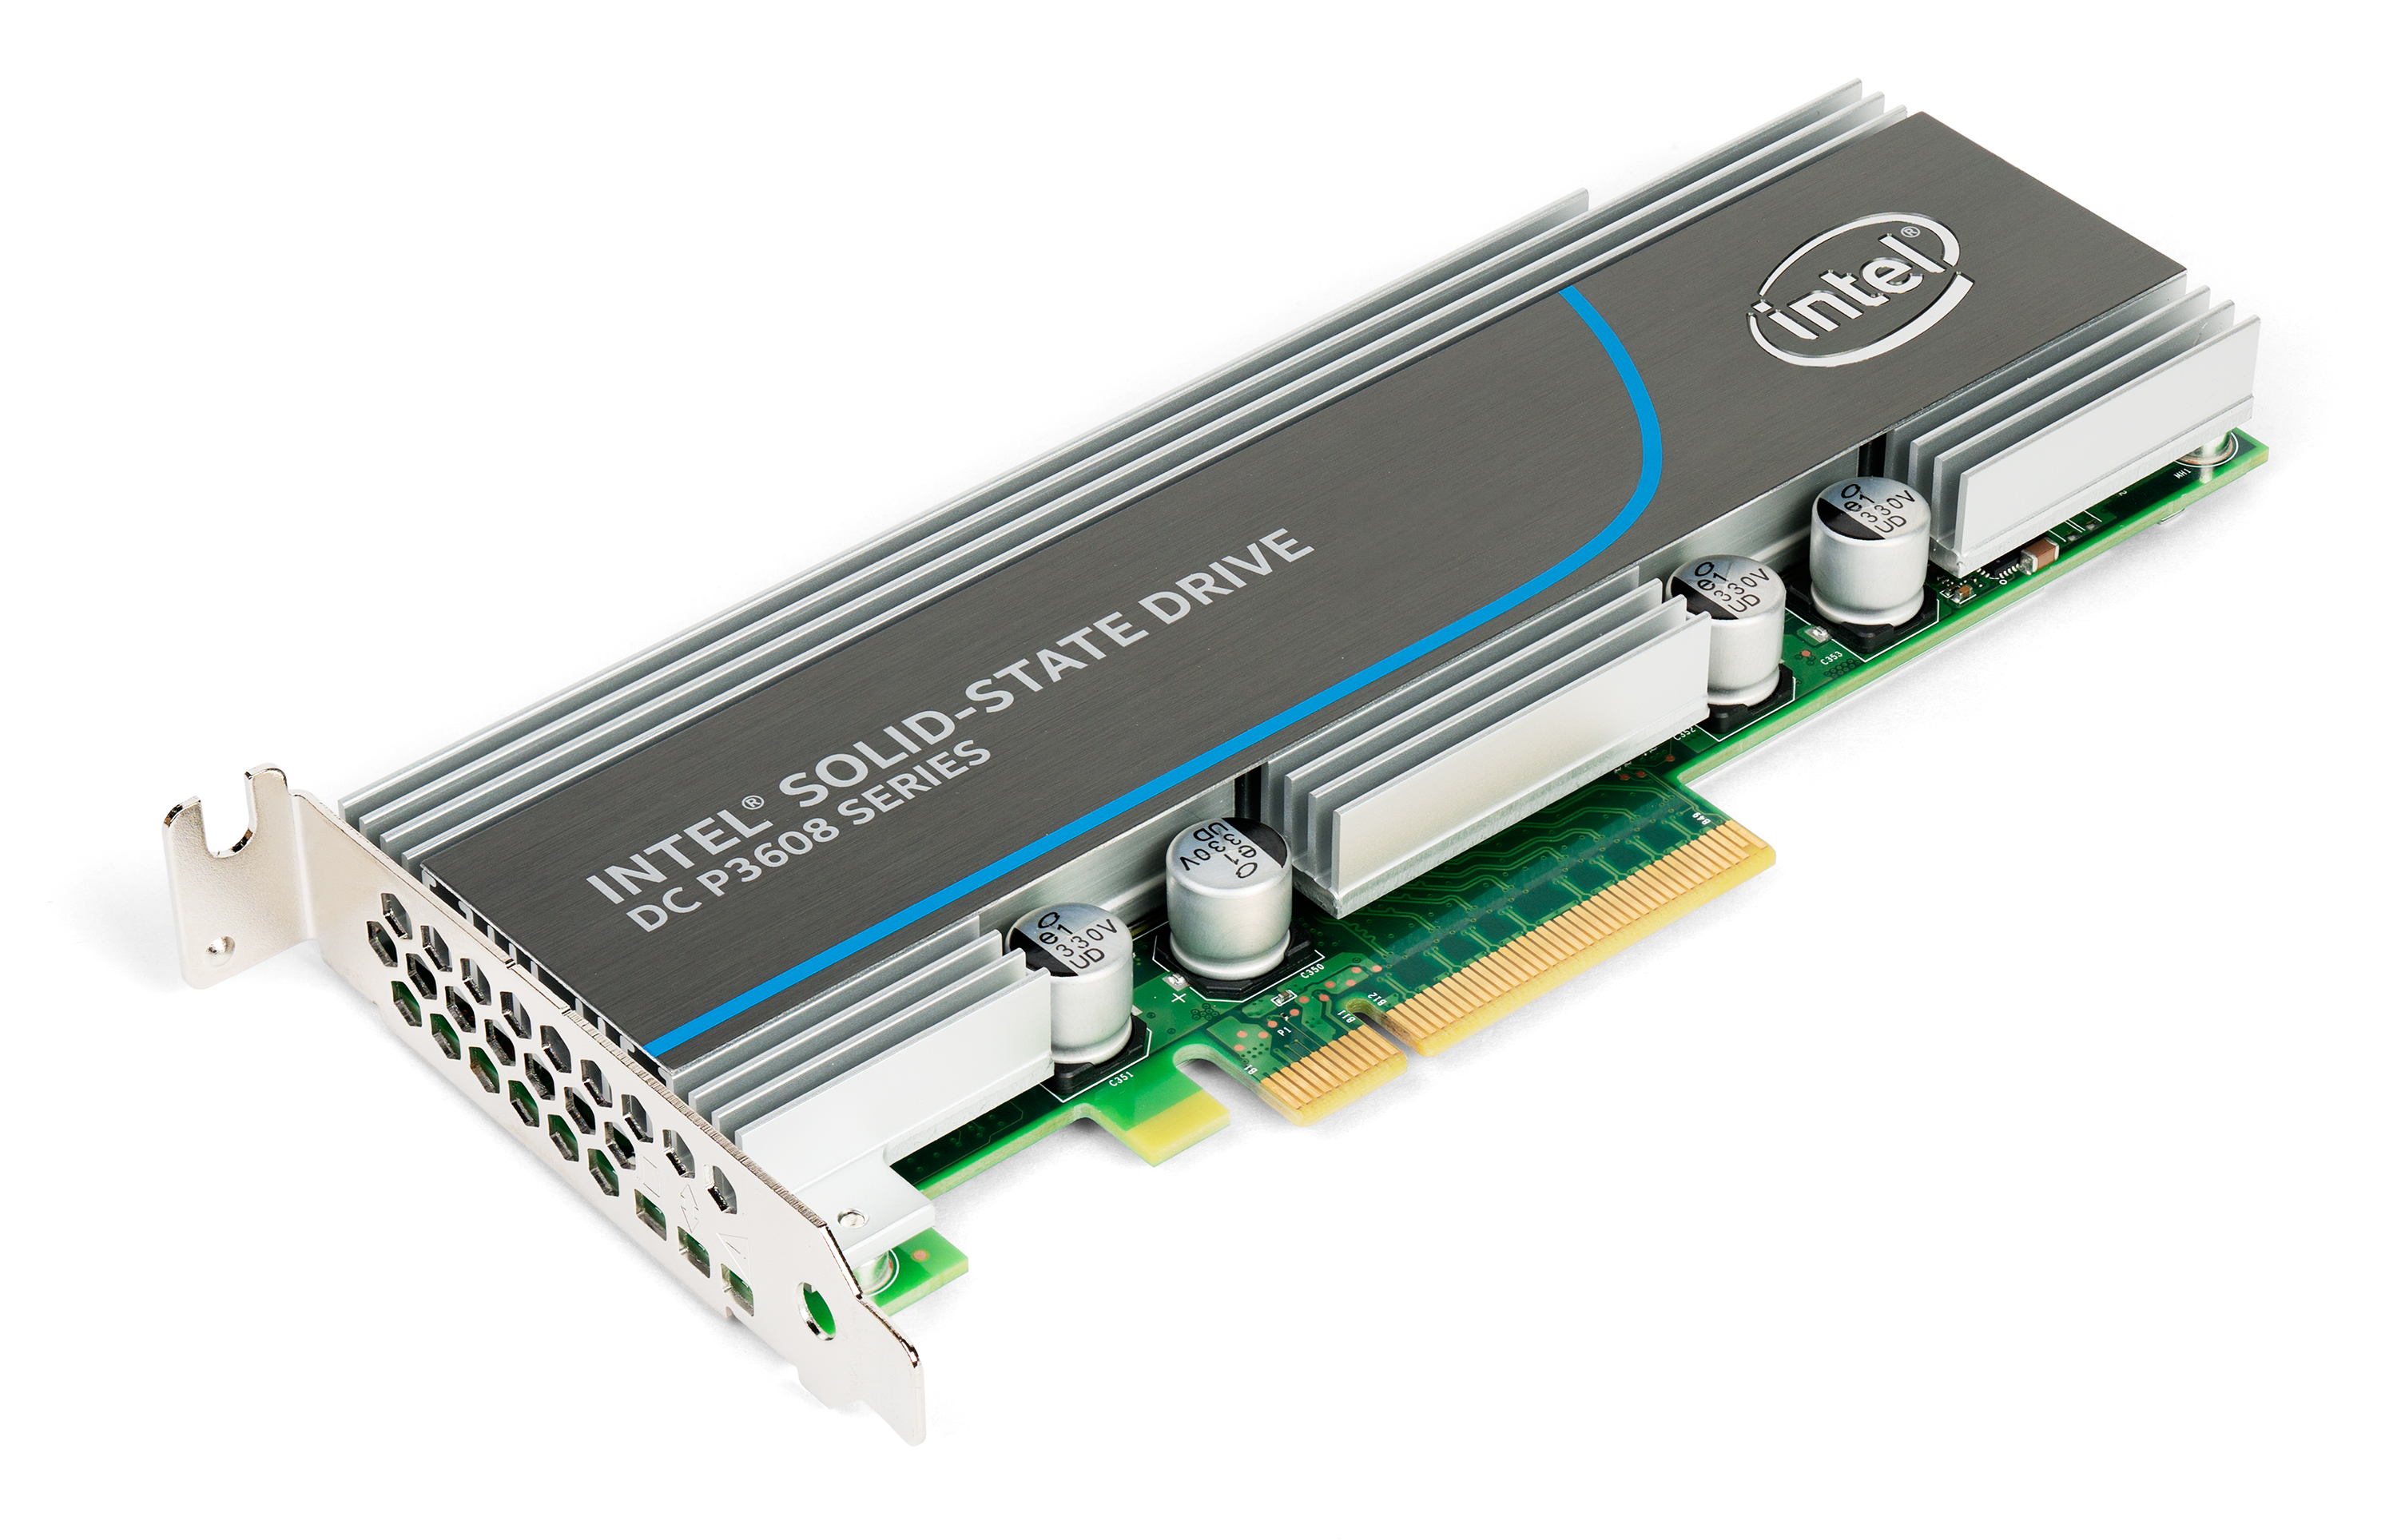 Intel P3608 NVMe flash SSD, PCI-E add-in card